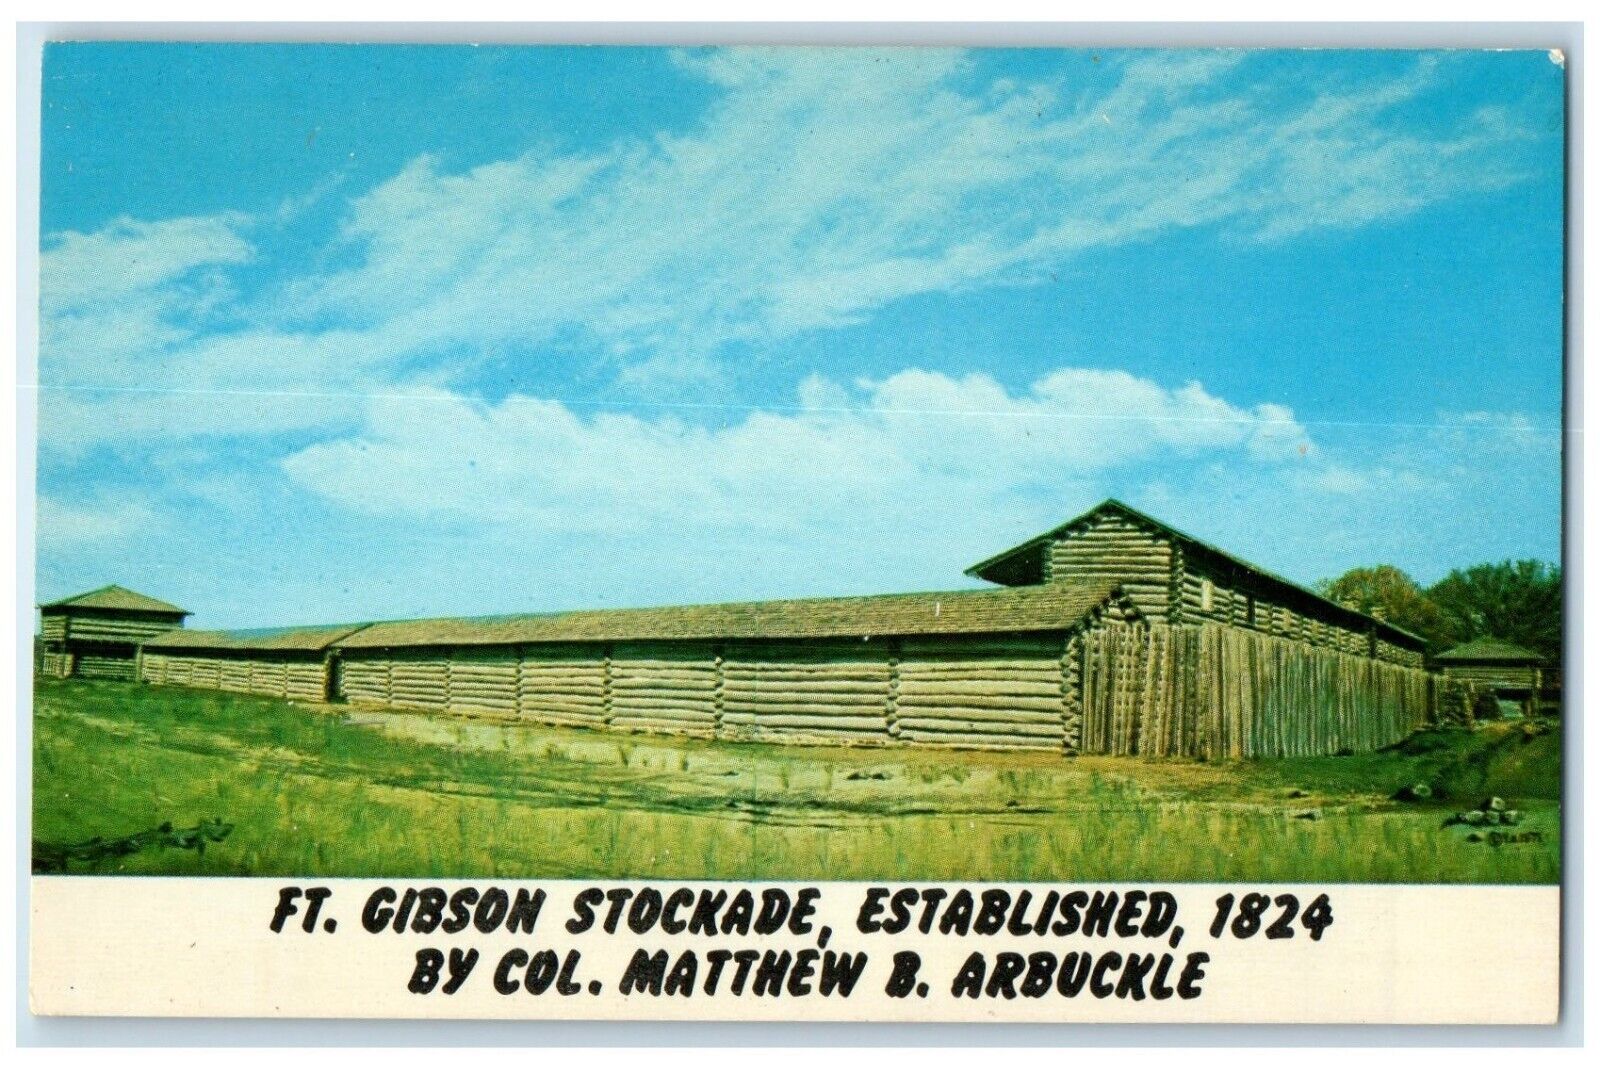 c1960's Ft. Gibson Stockade By Col. Matthew B. Arcbucle Oklahoma OK Postcard